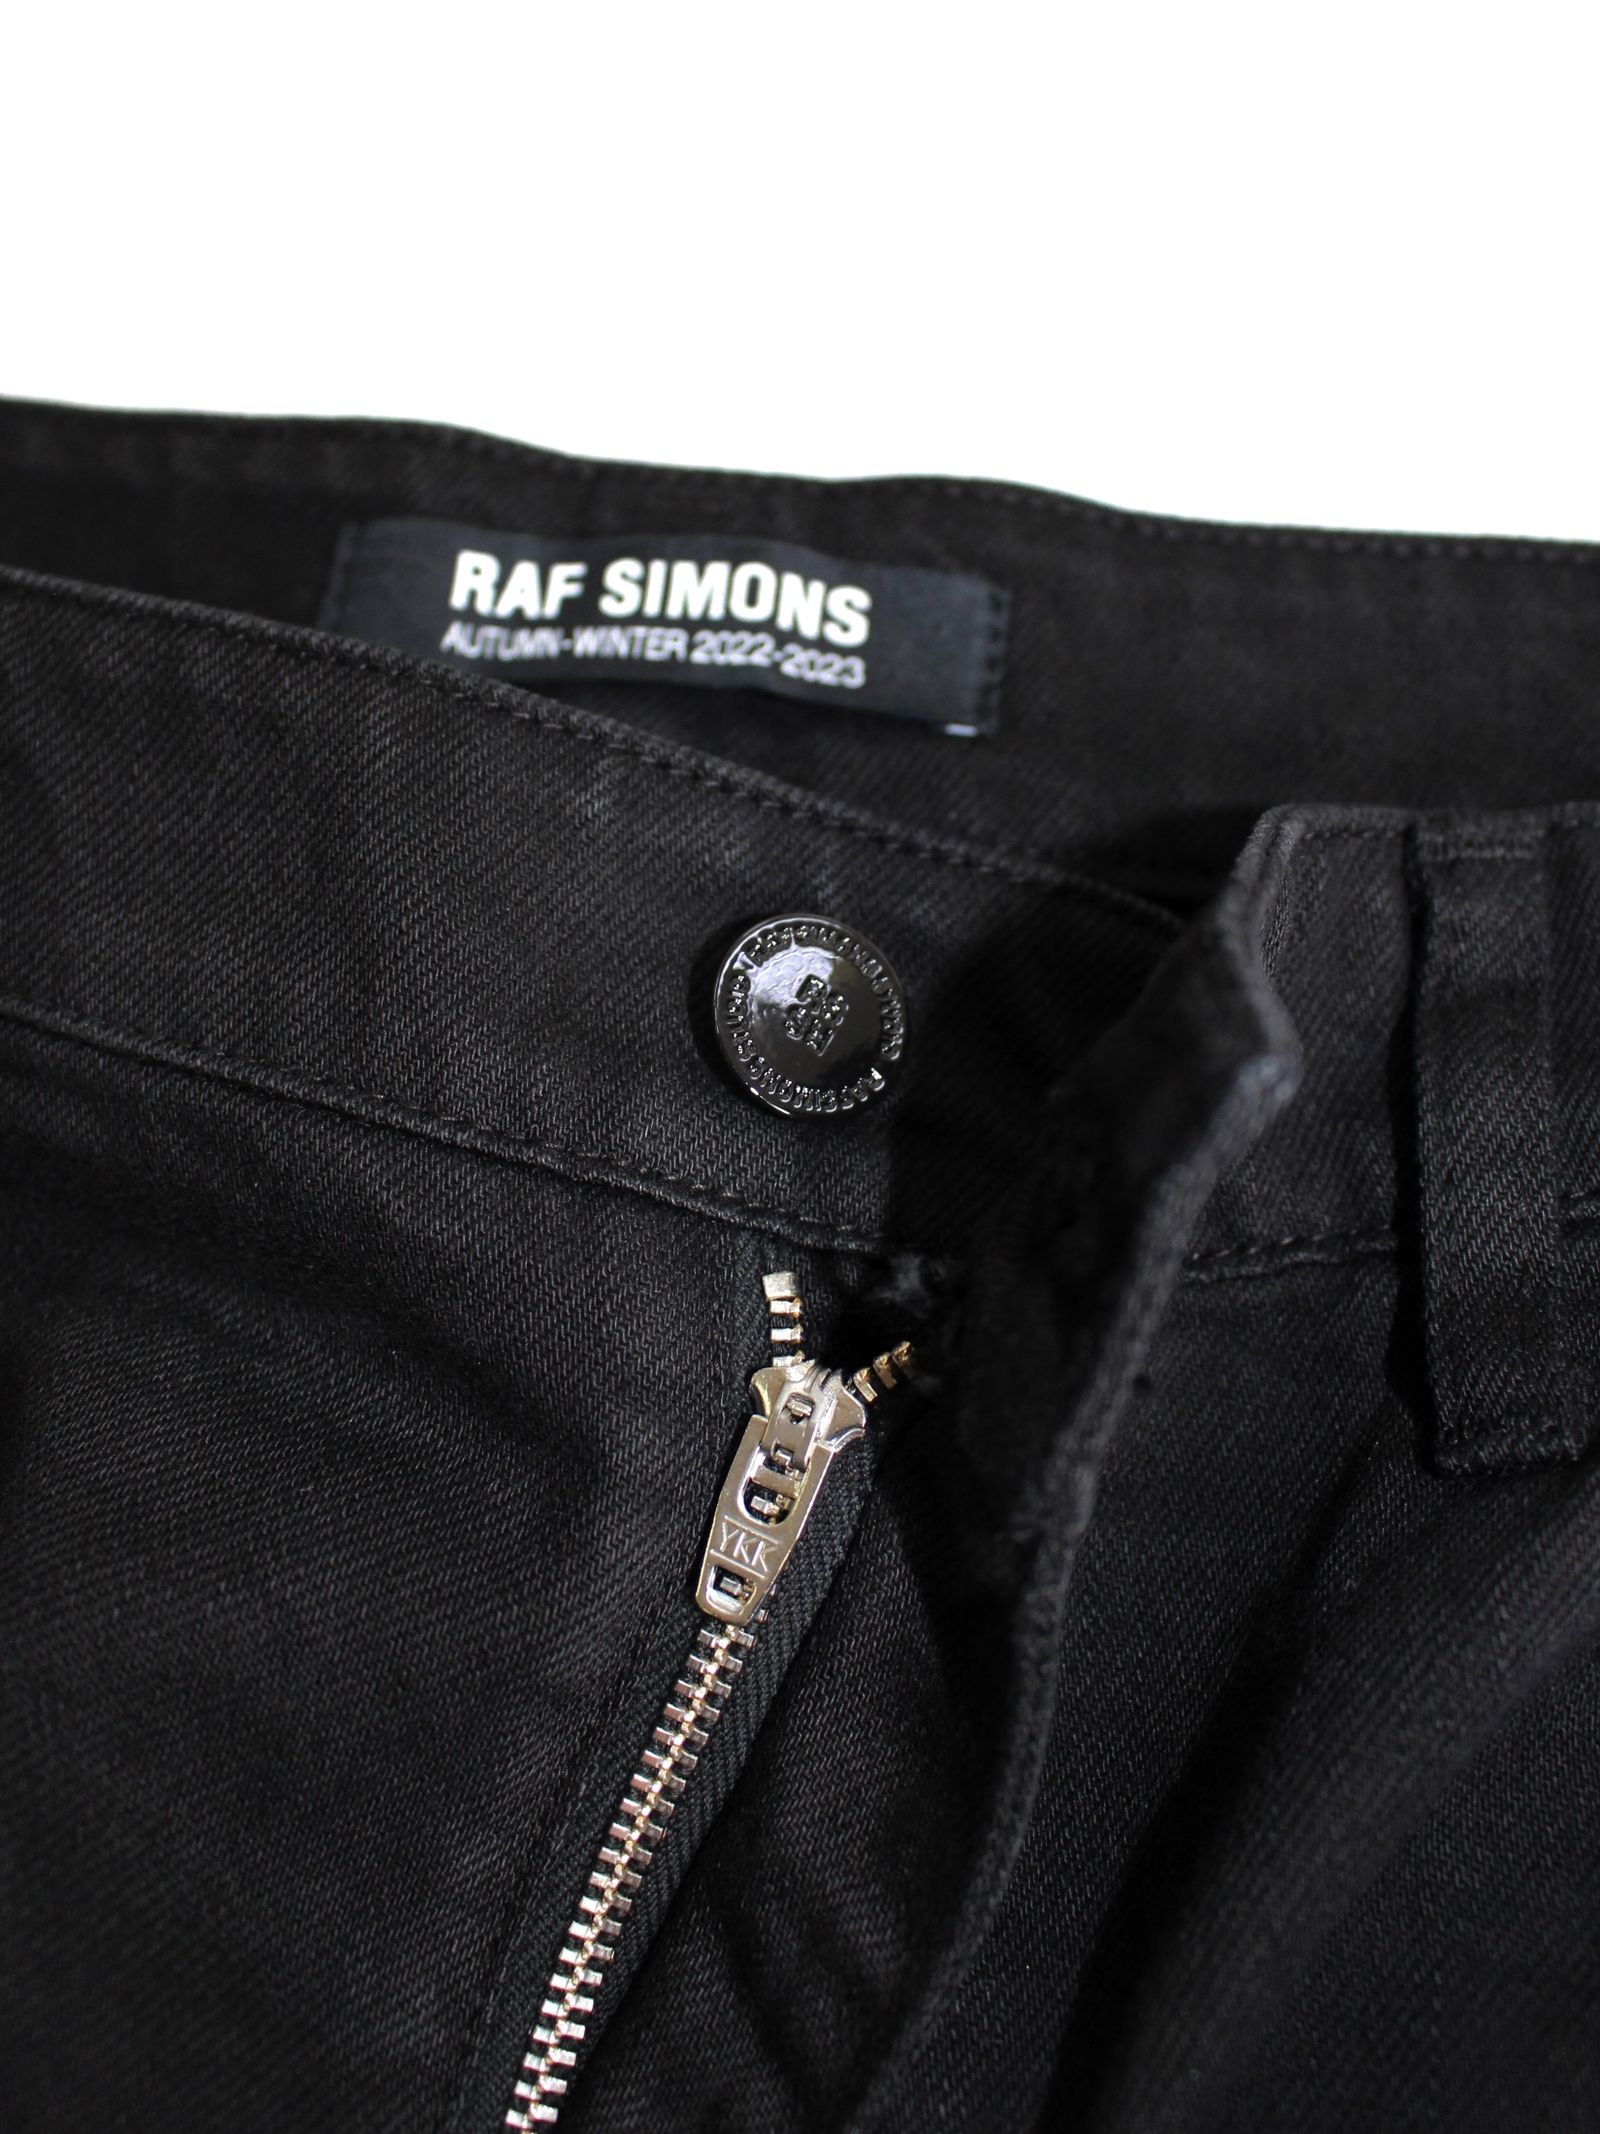 RAF SIMONS - 【22AW】スリムフィット デニム パンツ / SLIM FIT DENIM ...